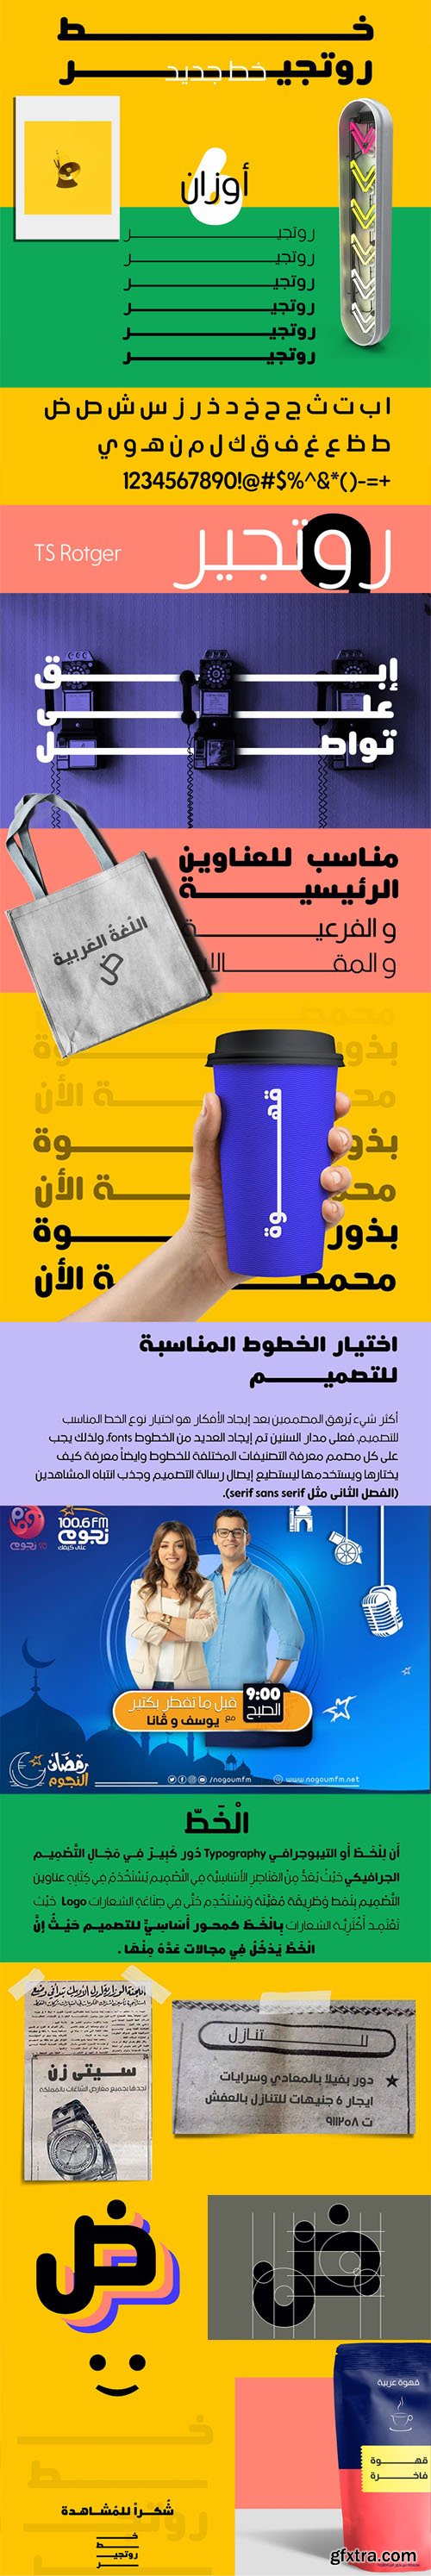 Rotger Arabic Sans Serif Typeface [4-Weights]